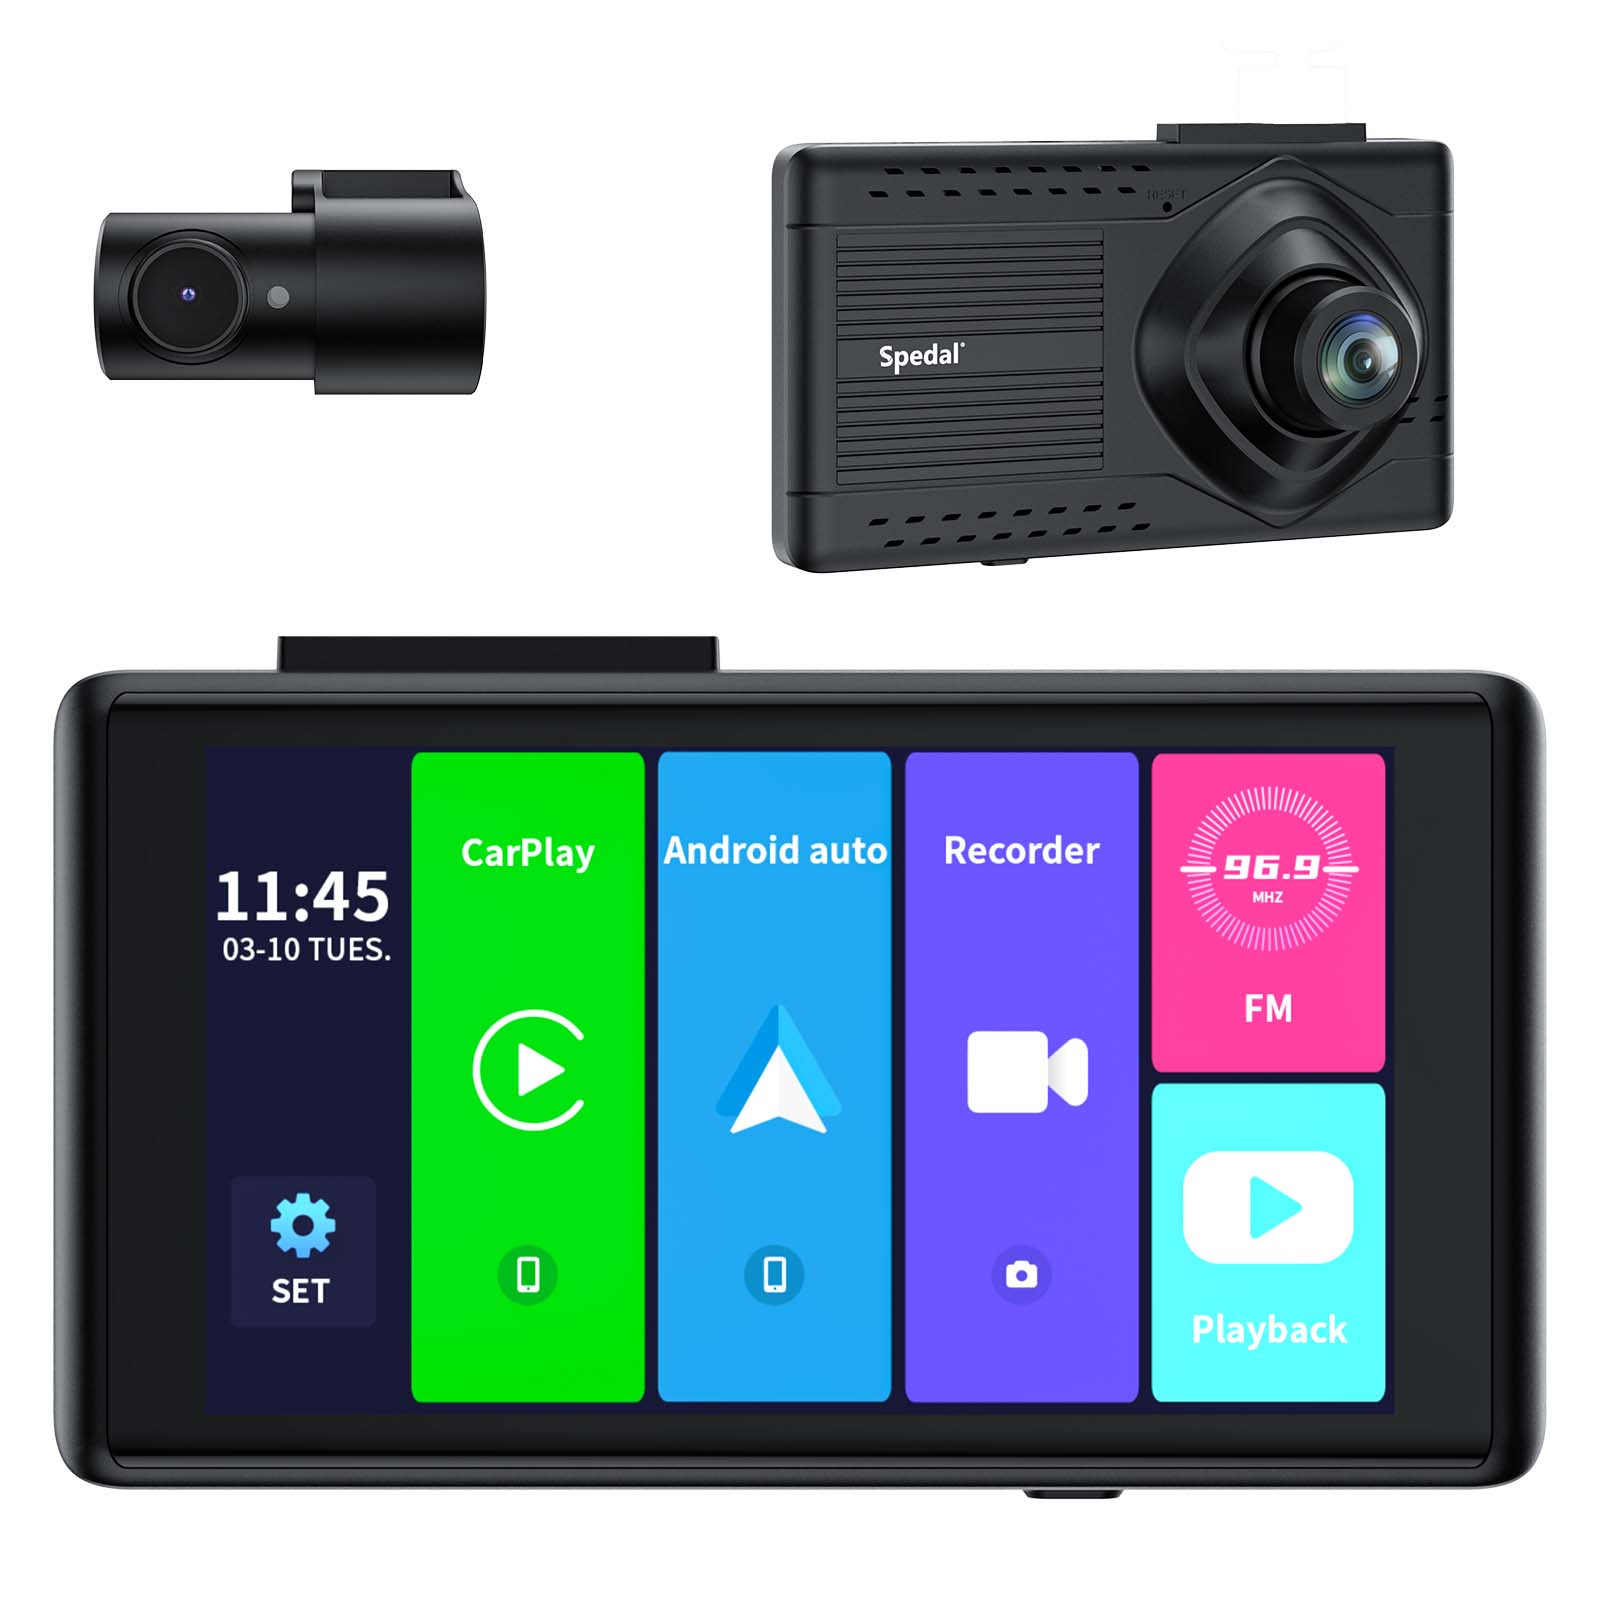 CarPlay Car Radio Receiver Sale Online- Toguard – Toguard camera